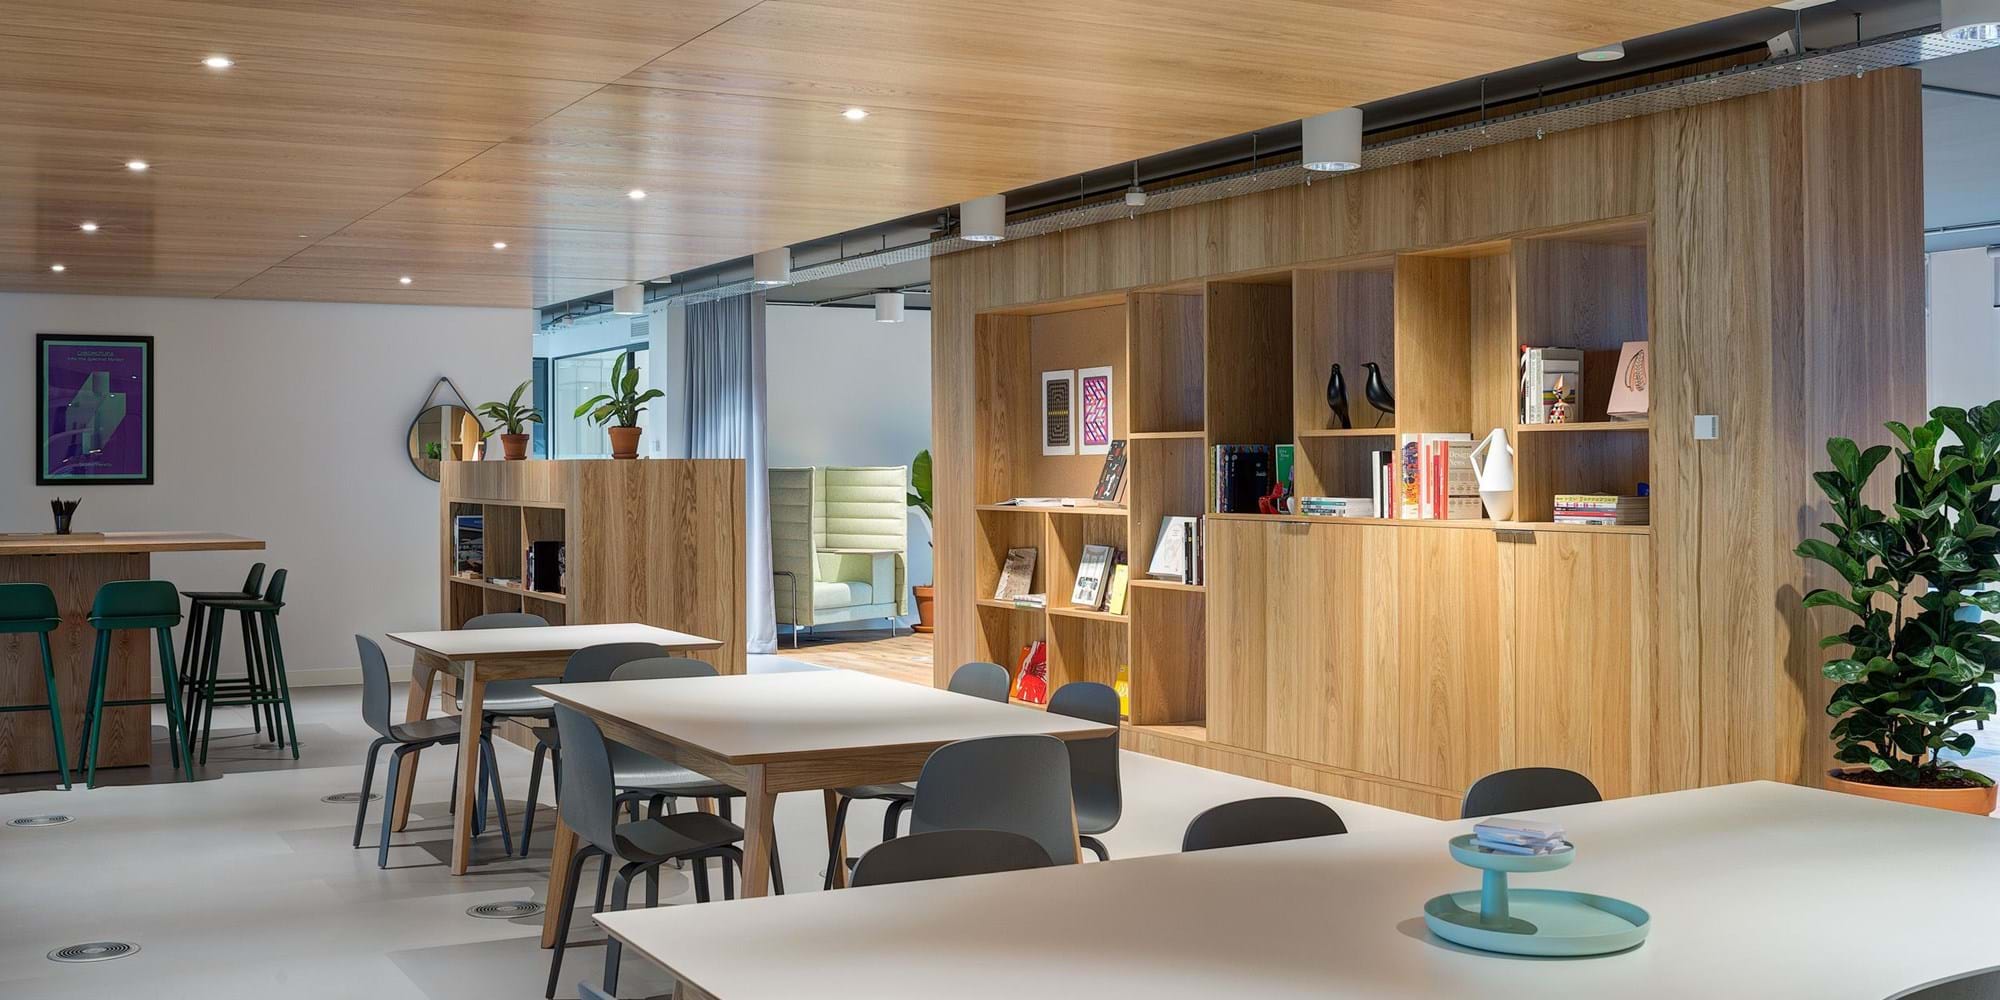 Modus Workspace office design, fit out and refurbishment - Spaces - Uxbridge - Spaces Uxbridge 06 highres sRGB.jpg